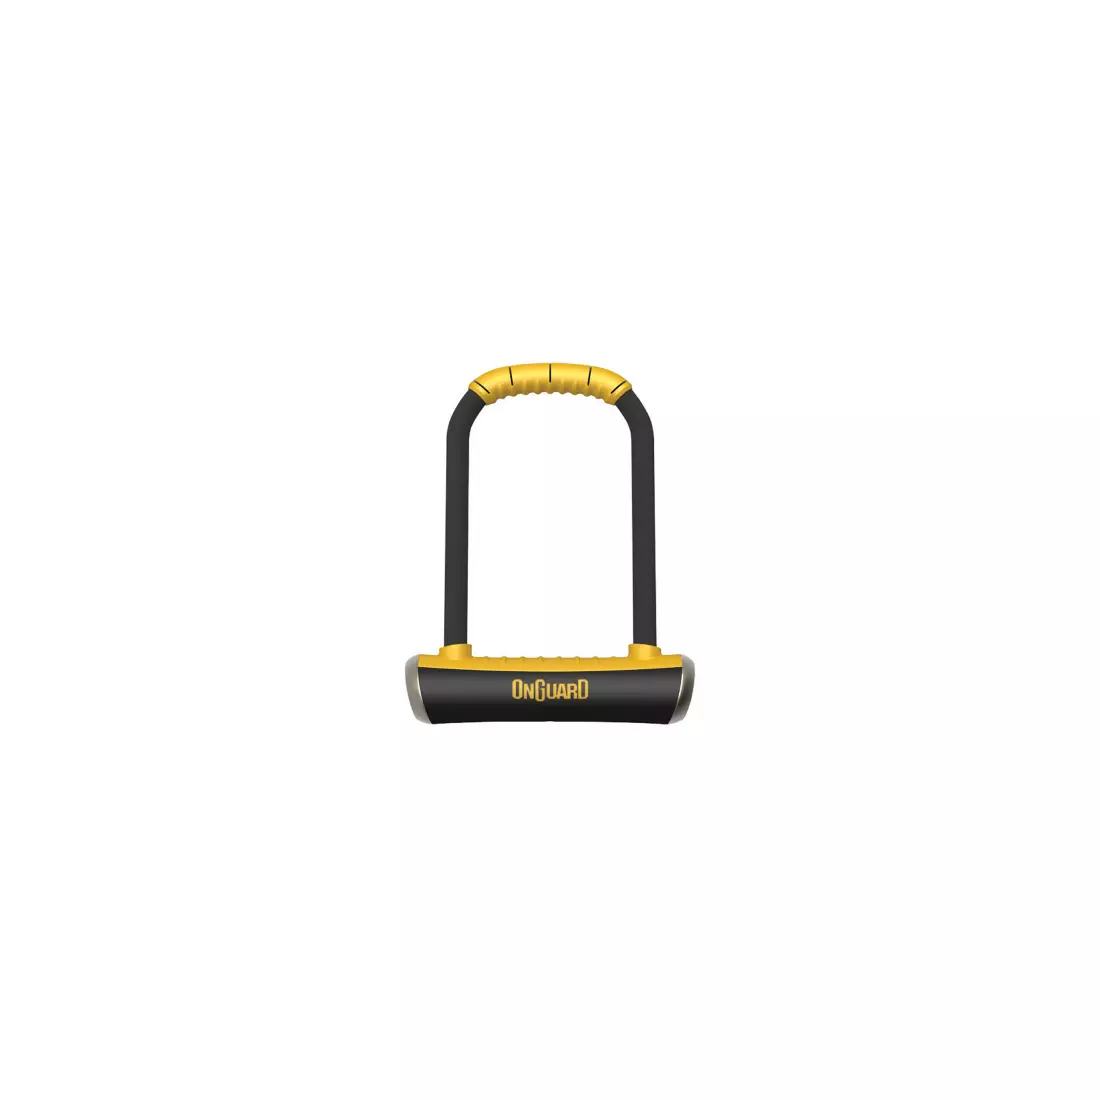 Bicycle lock ONGUARD PitBull STD 8003 U-LOCK - 14mm 115mm 230mm - 5 x key with code ONG-8003 SS16